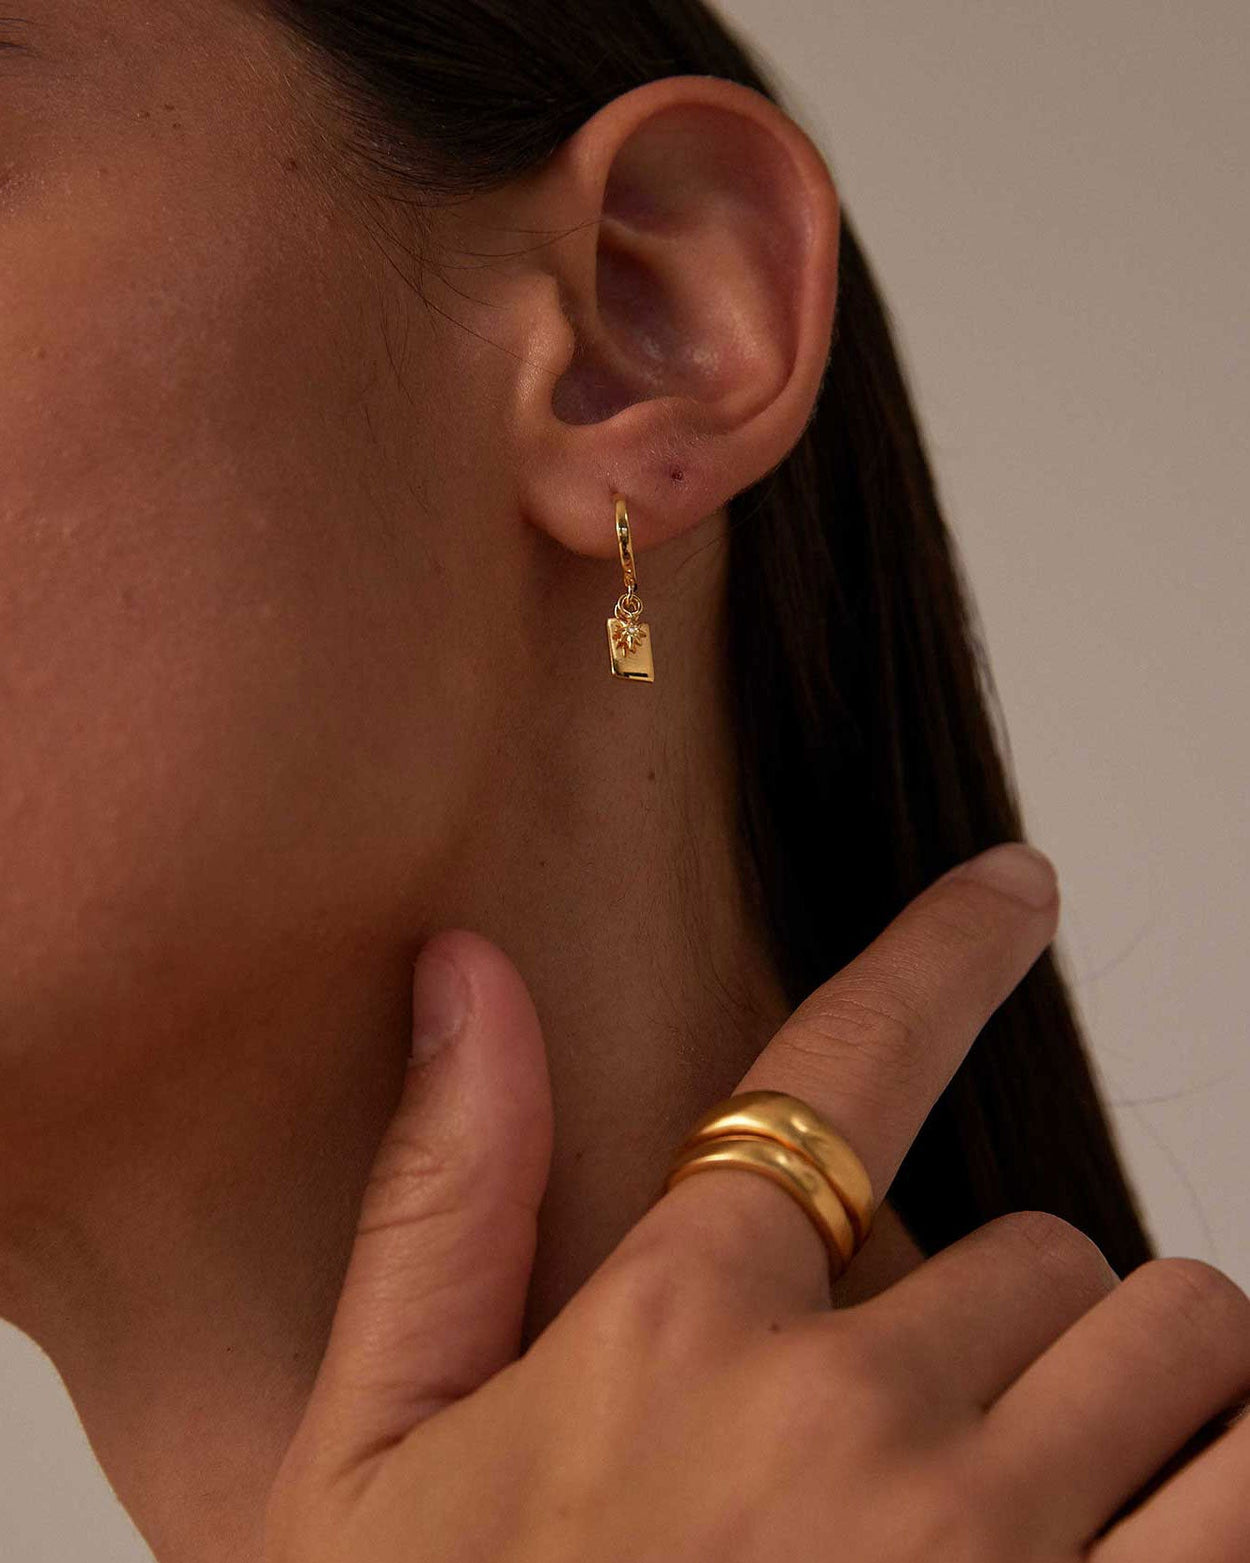 14K Gold 20mm Star Hoop Earrings - JCPenney